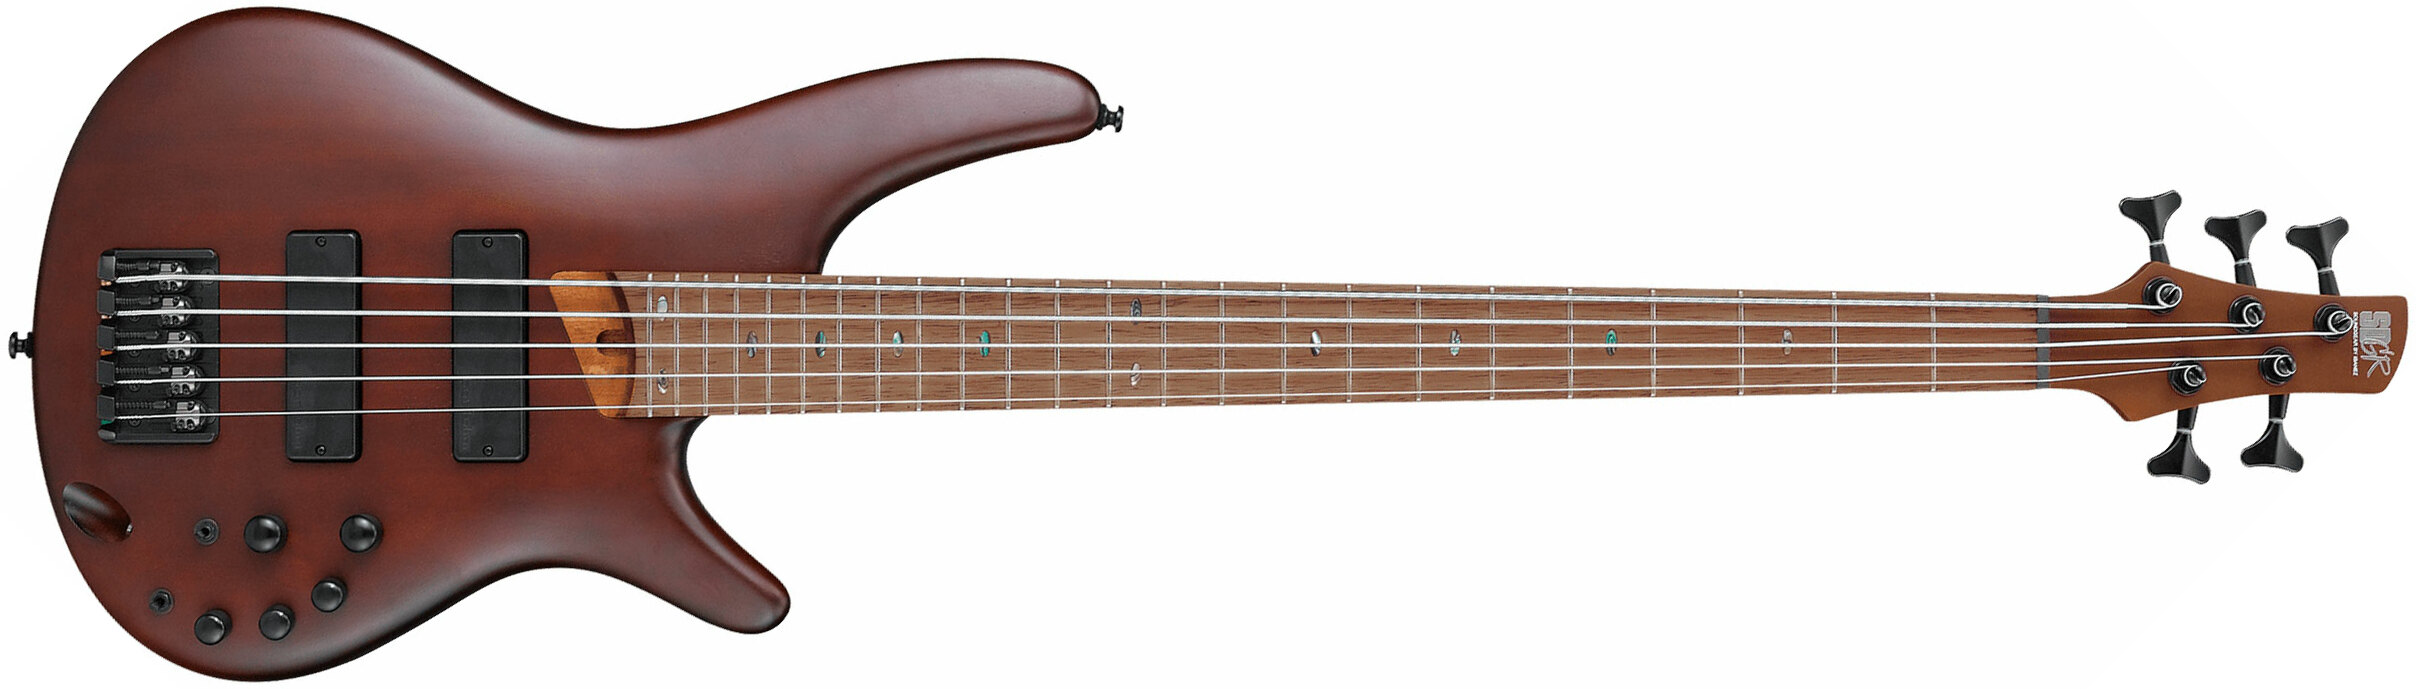 Ibanez Sr505e Bm Standard 5c Active Bartolini Rw - Brown Mahogany - Solid body electric bass - Main picture